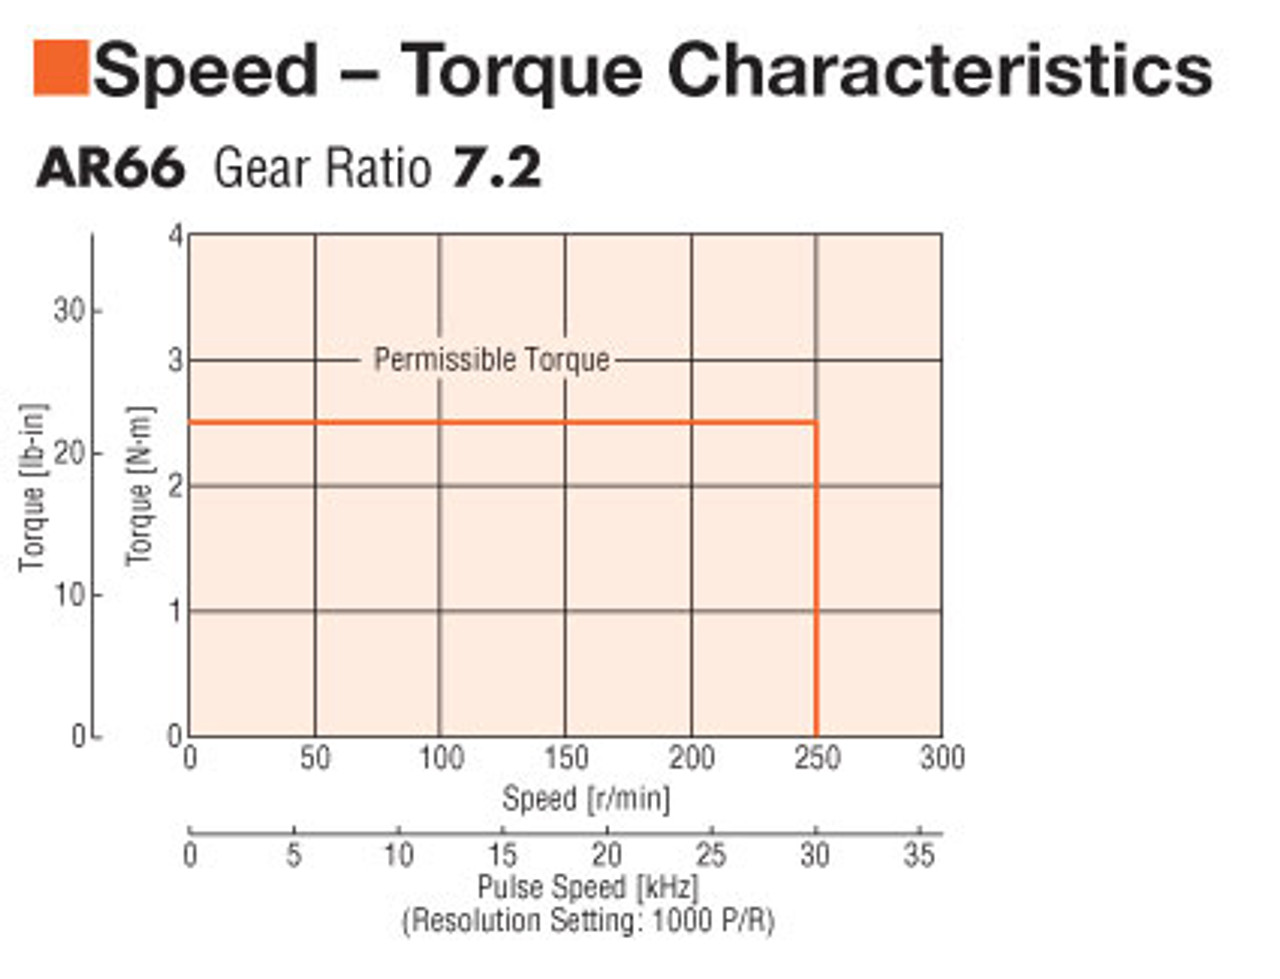 AR66MAD-T7.2-3 - Speed-Torque